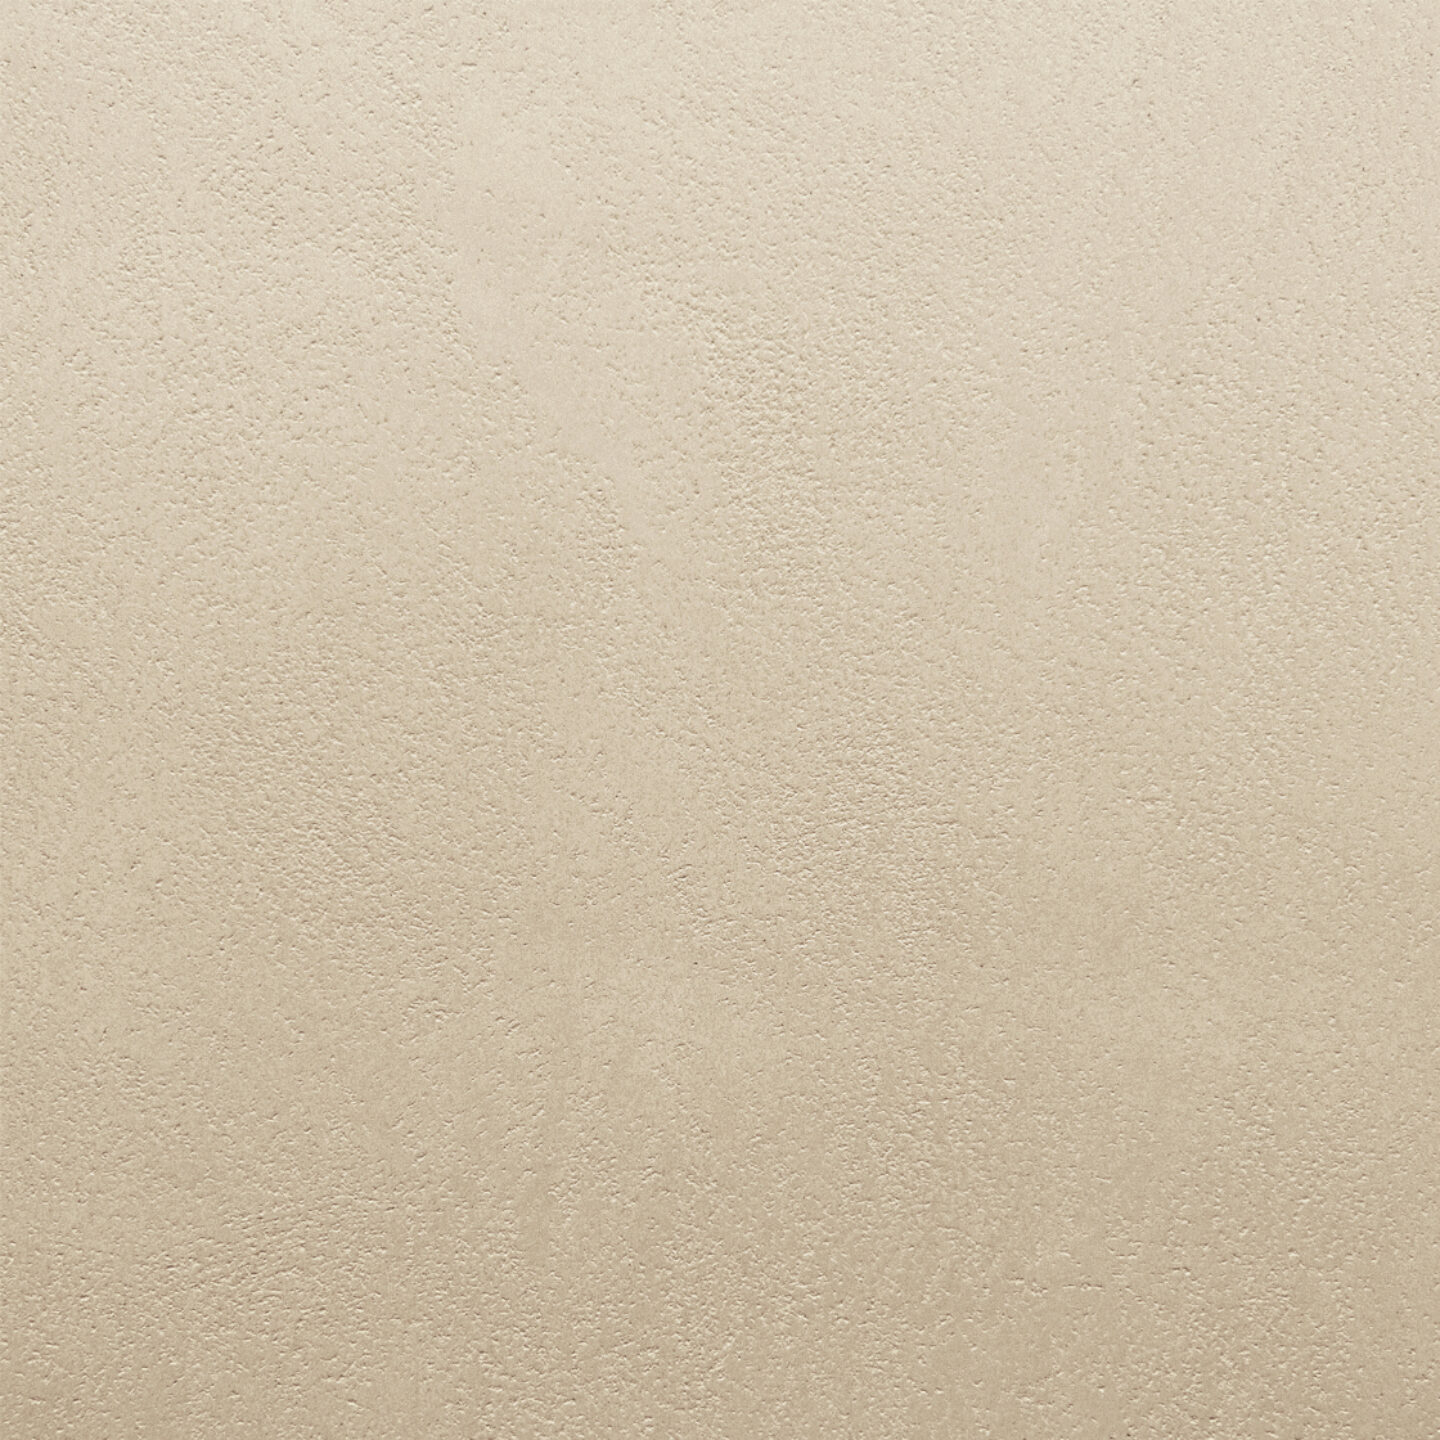 Close up of Armourcoat leatherstone exterior polished plaster finish - 52